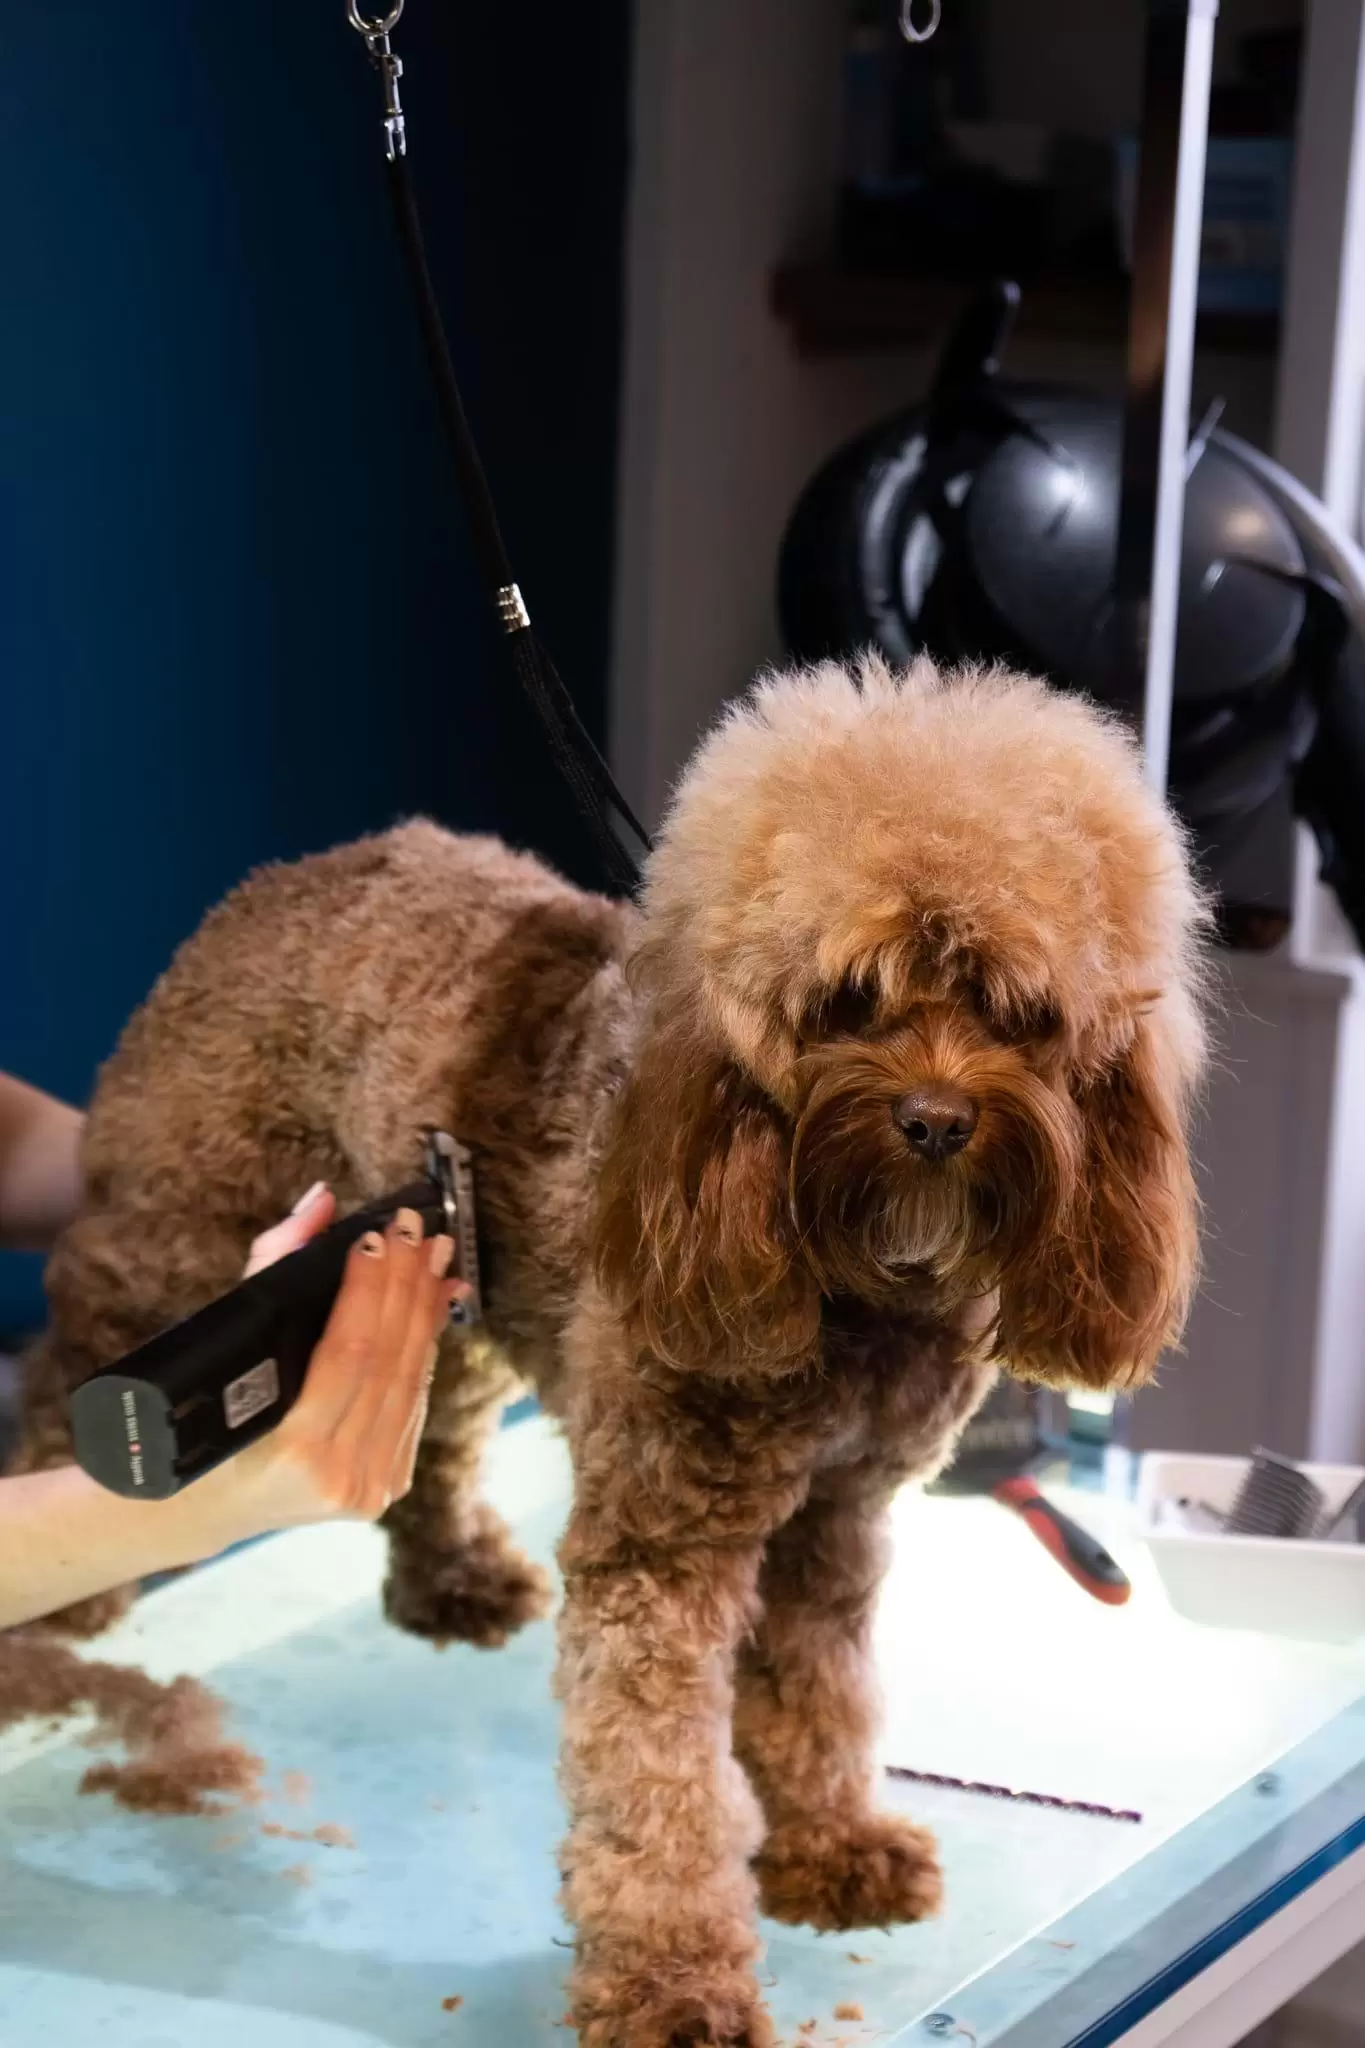 Cute dog getting hair trimmed